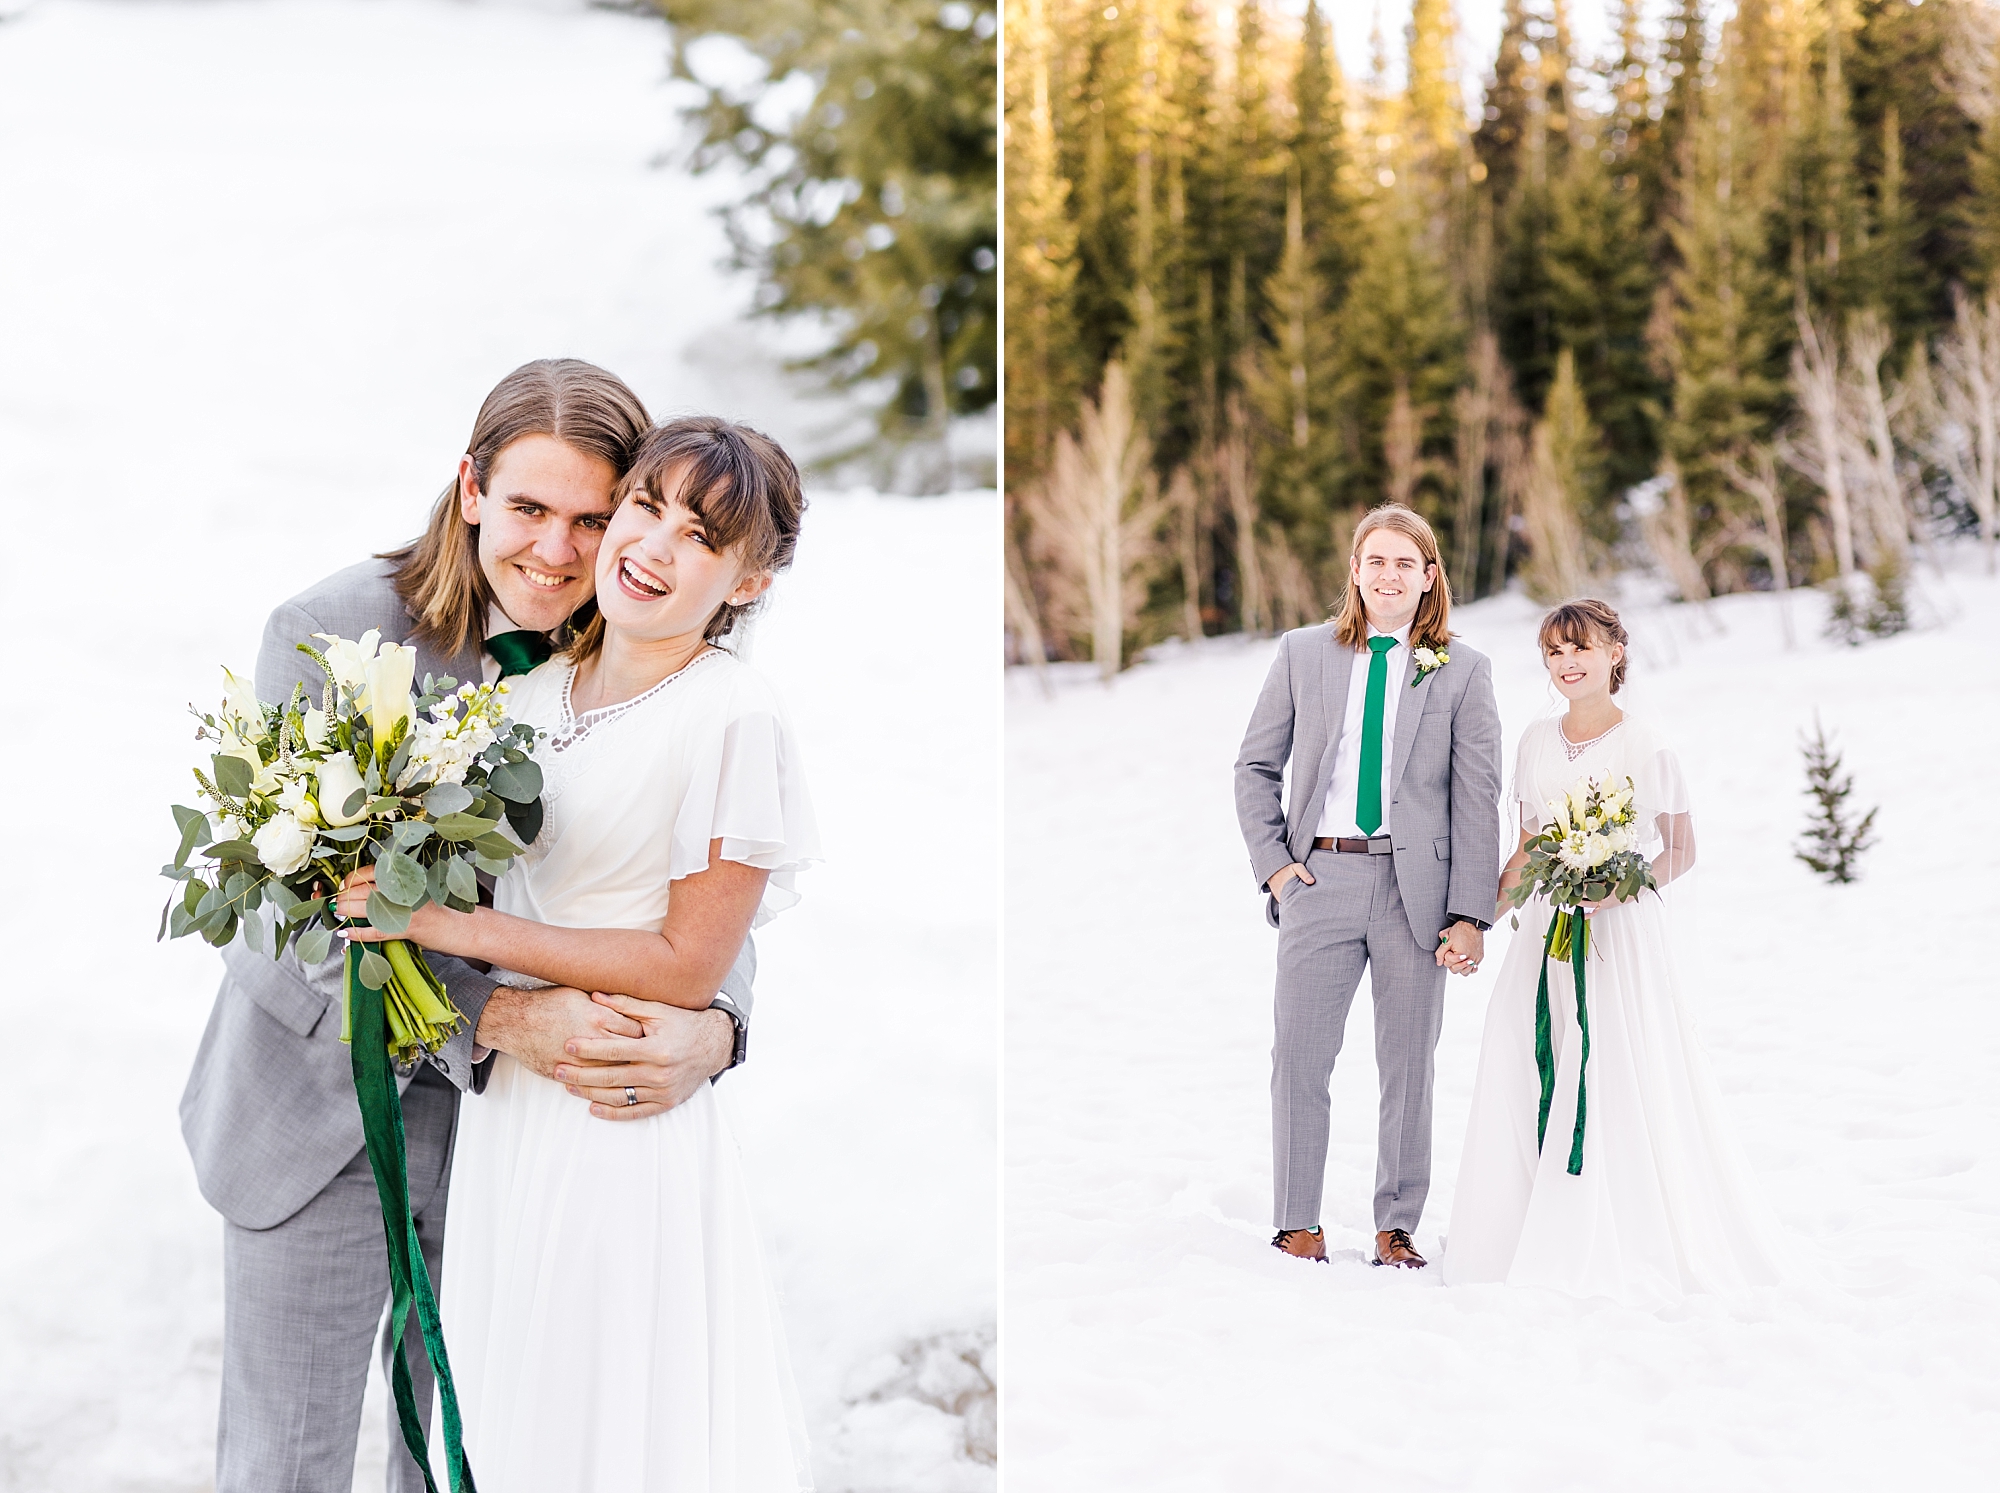 Winter wedding formals session in Utah